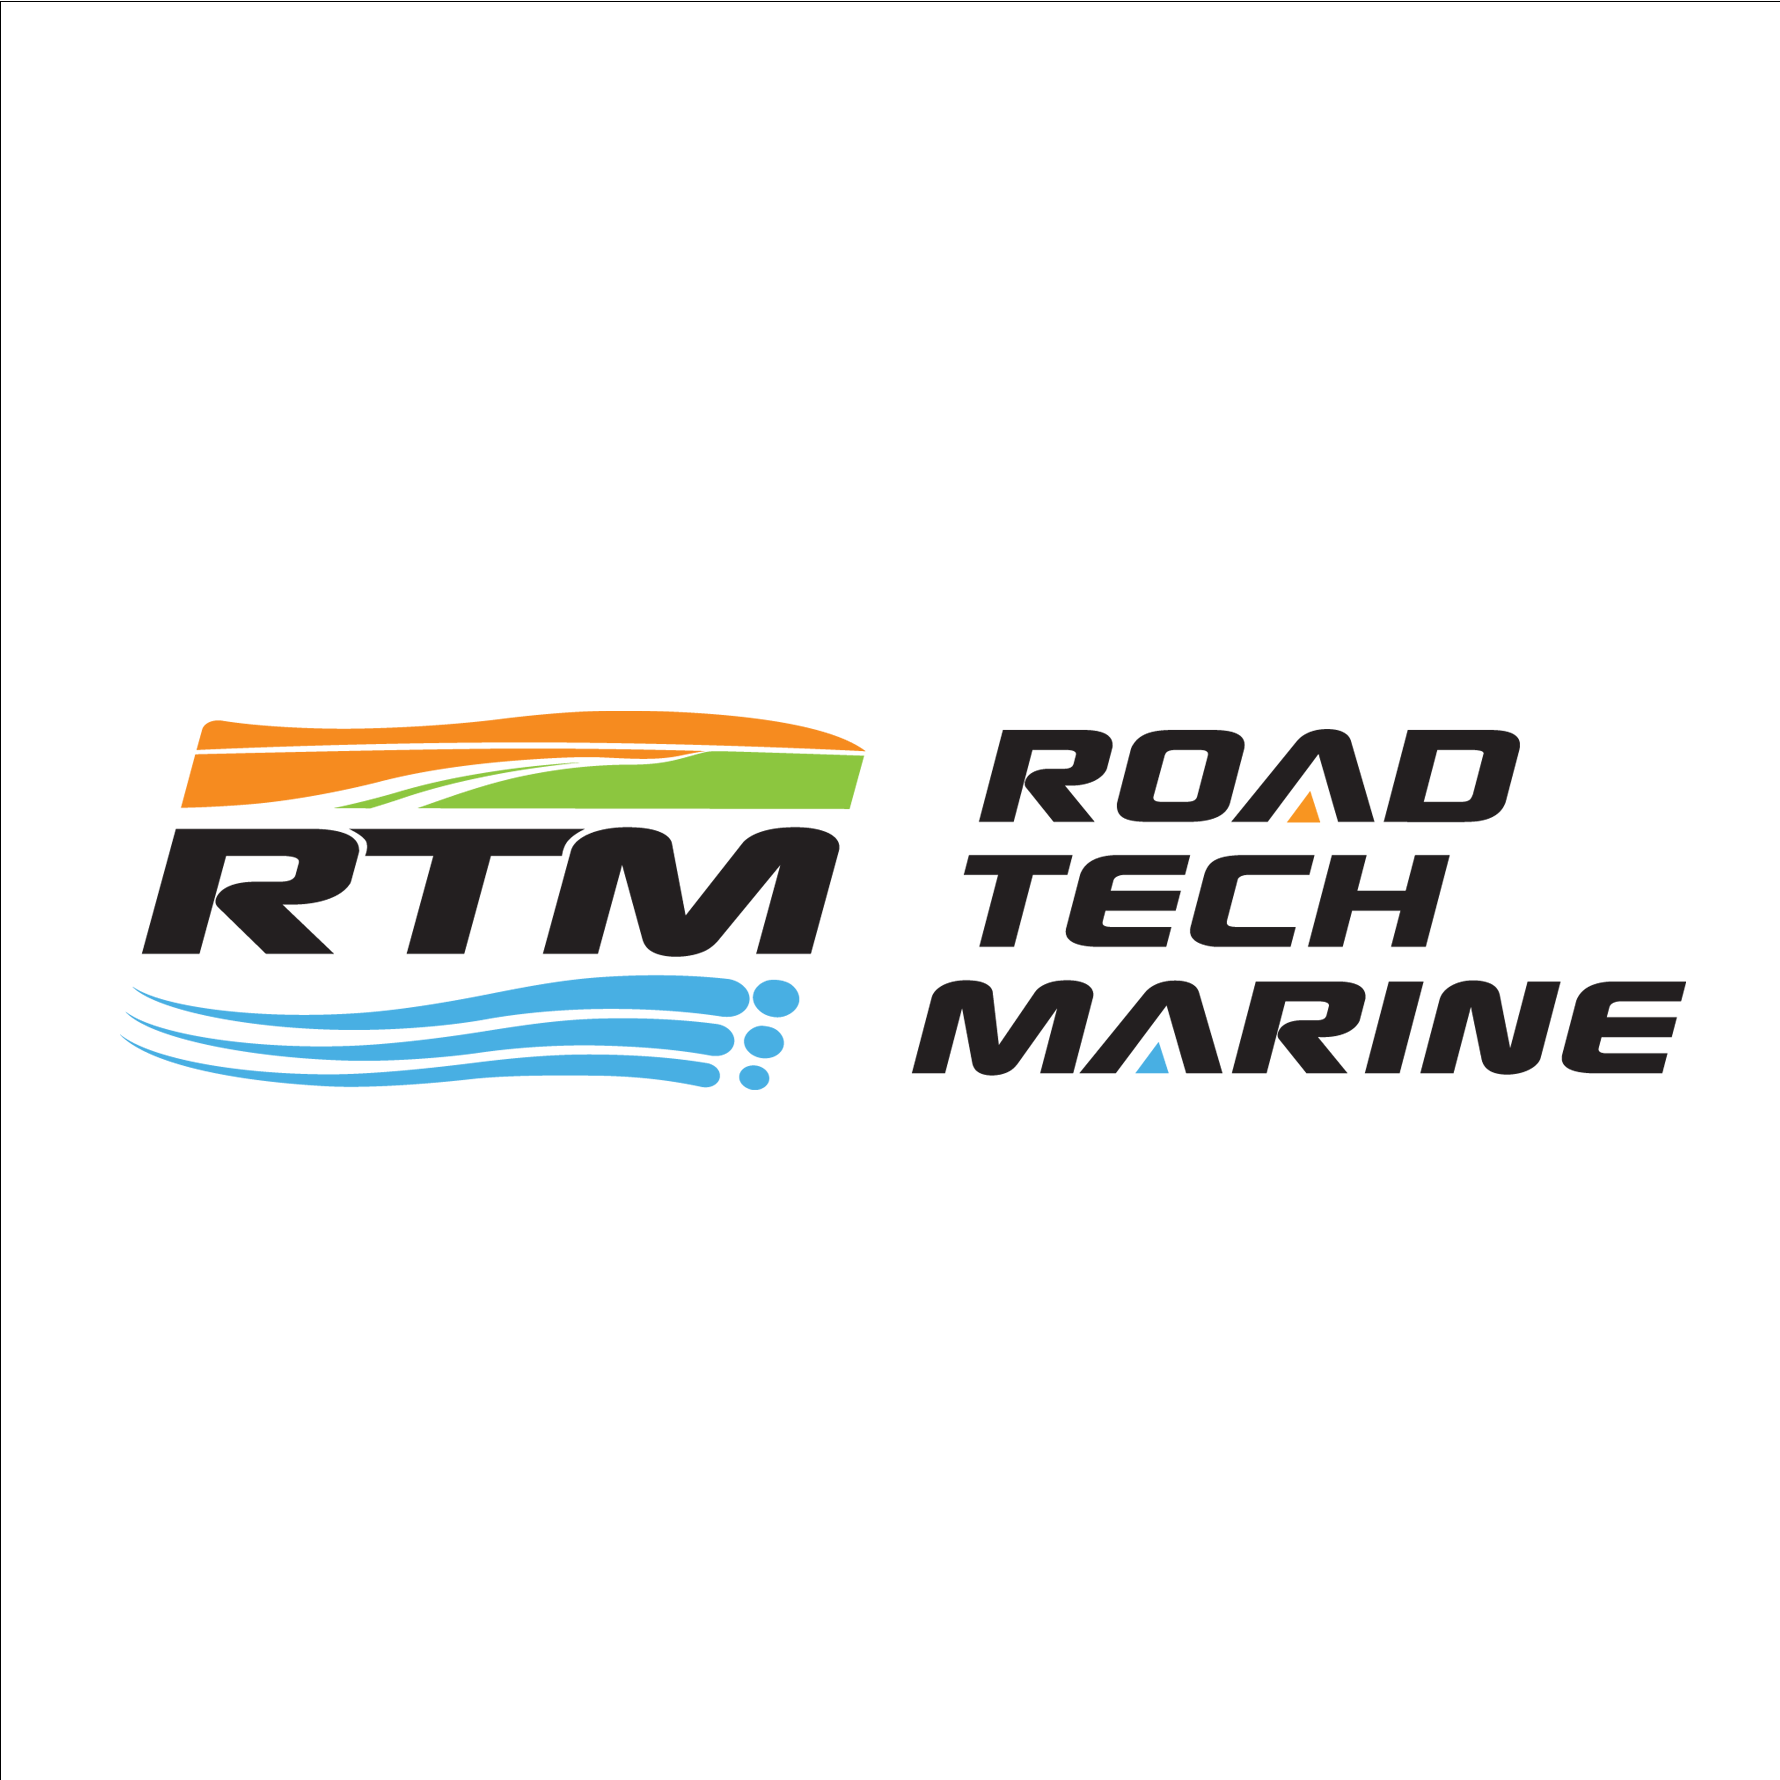 RTM - Road Tech Marine Geelong - Waurn Ponds, VIC 3216 - (03) 5202 4817 | ShowMeLocal.com